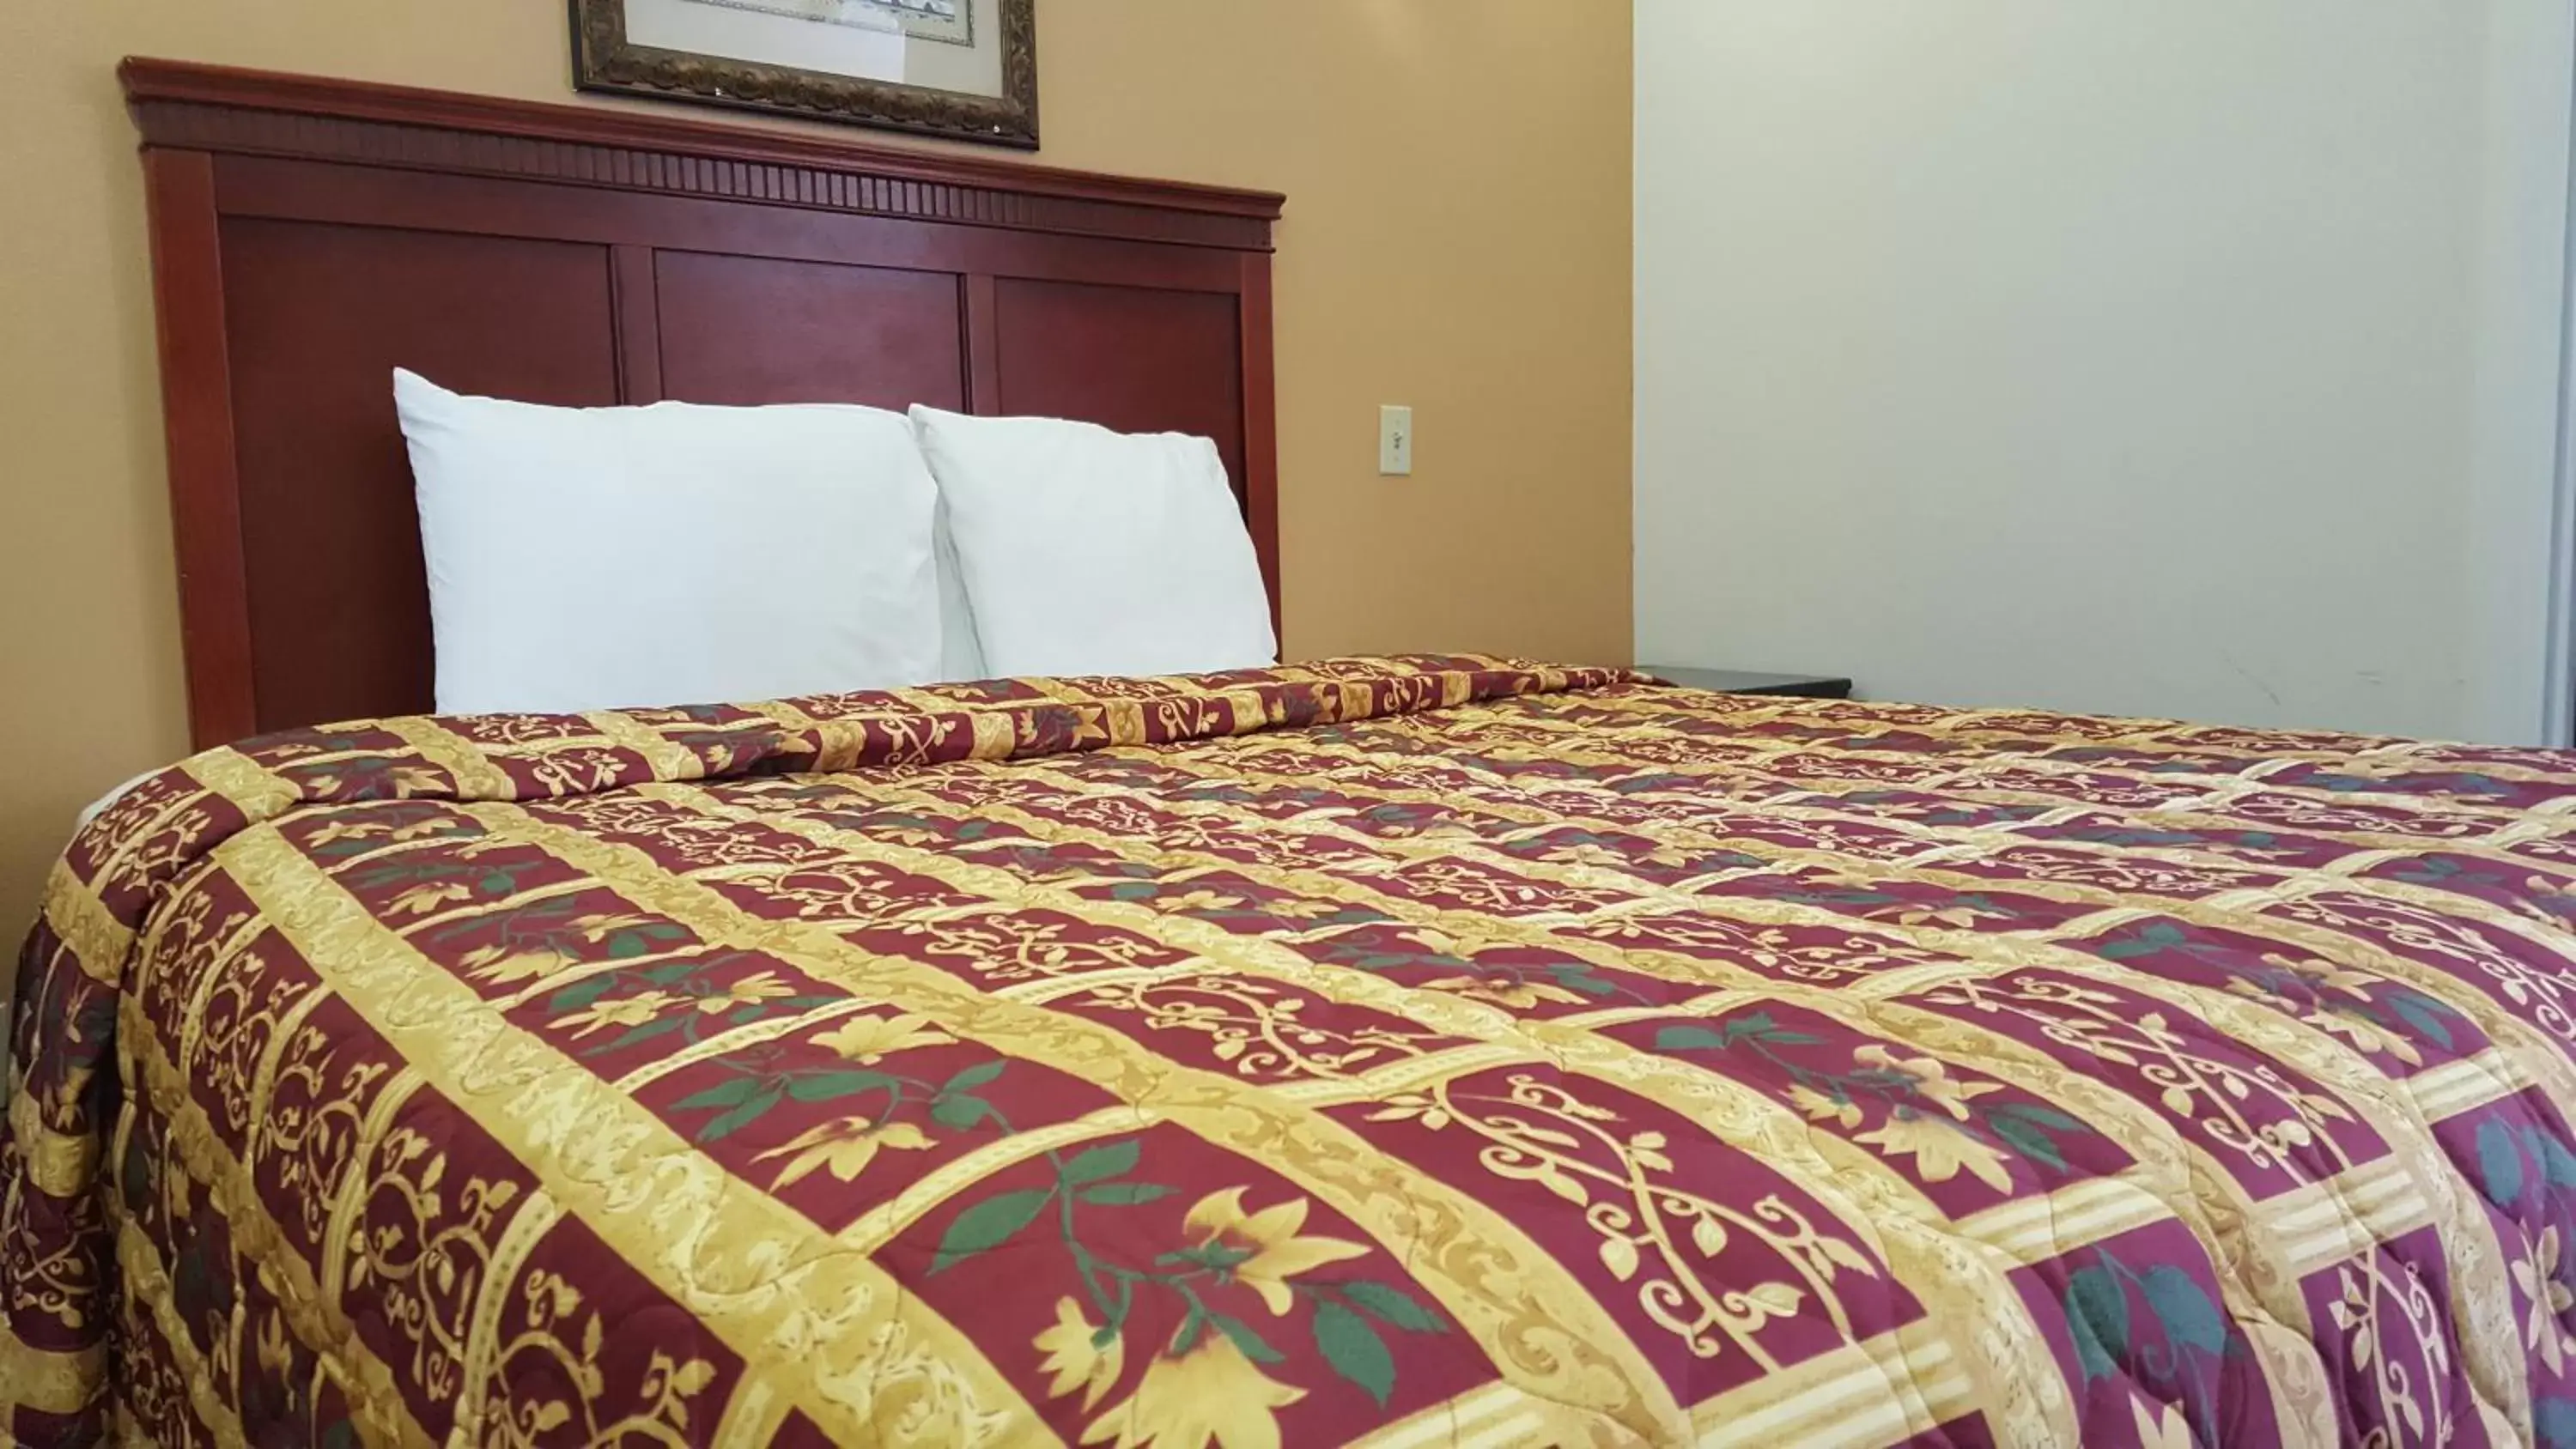 Bed, Room Photo in Royal Inn Motel Long Beach